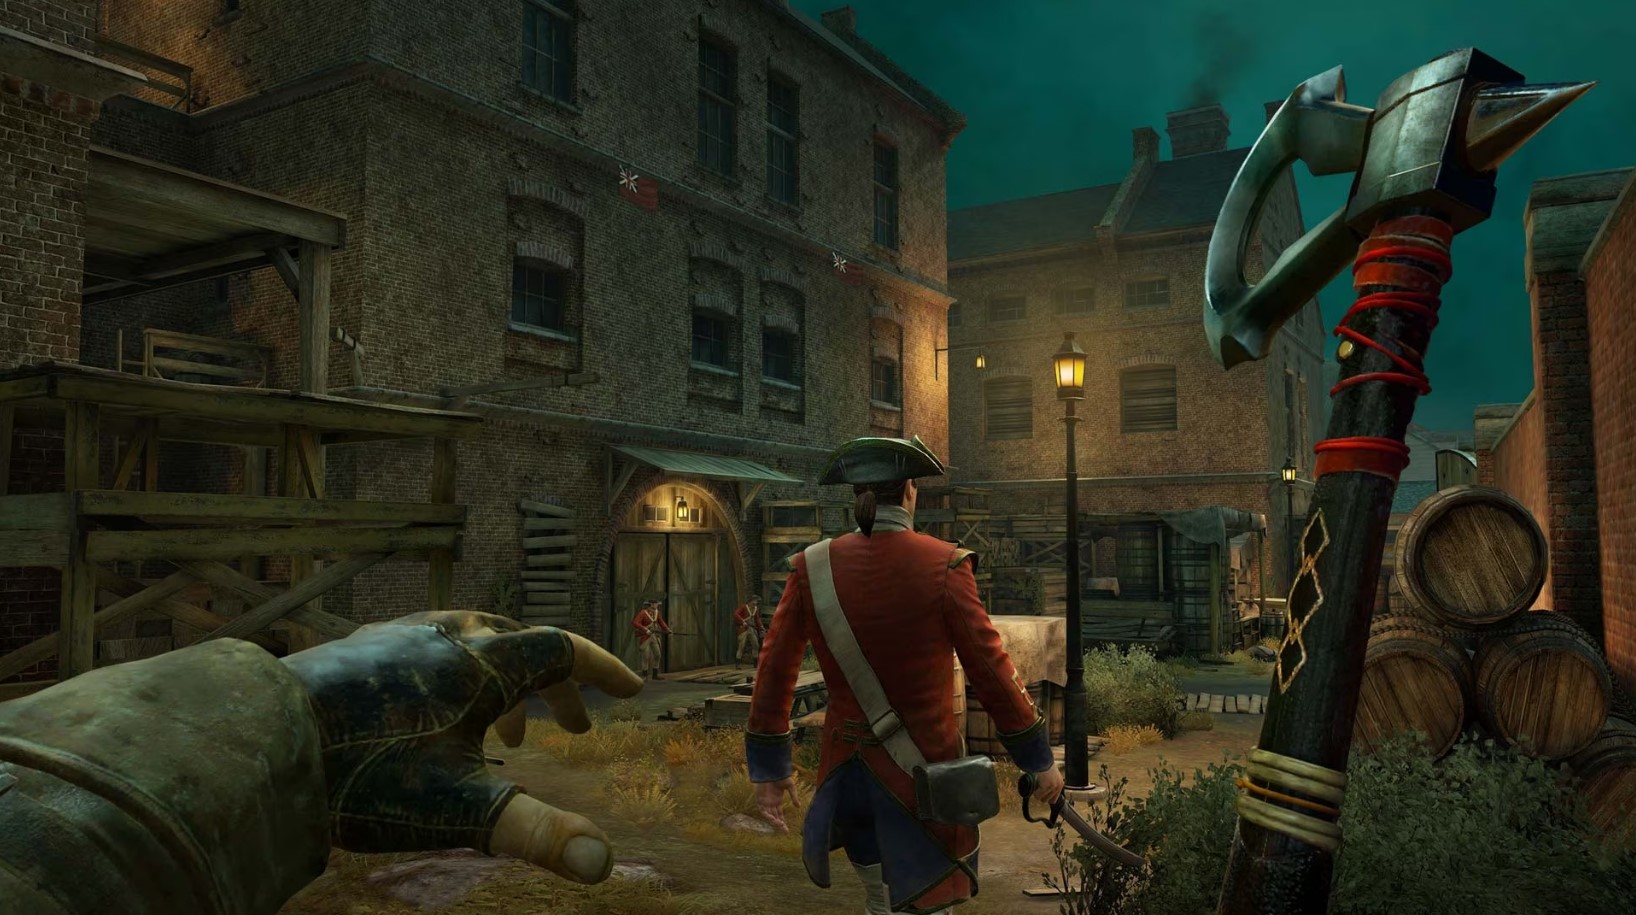 Assassins Creed Nexus VR Gameplay Footage Will Make Your Head Spin Assassin's Creed Nexus VR Gameplay Footage Will Make Your Head Spin